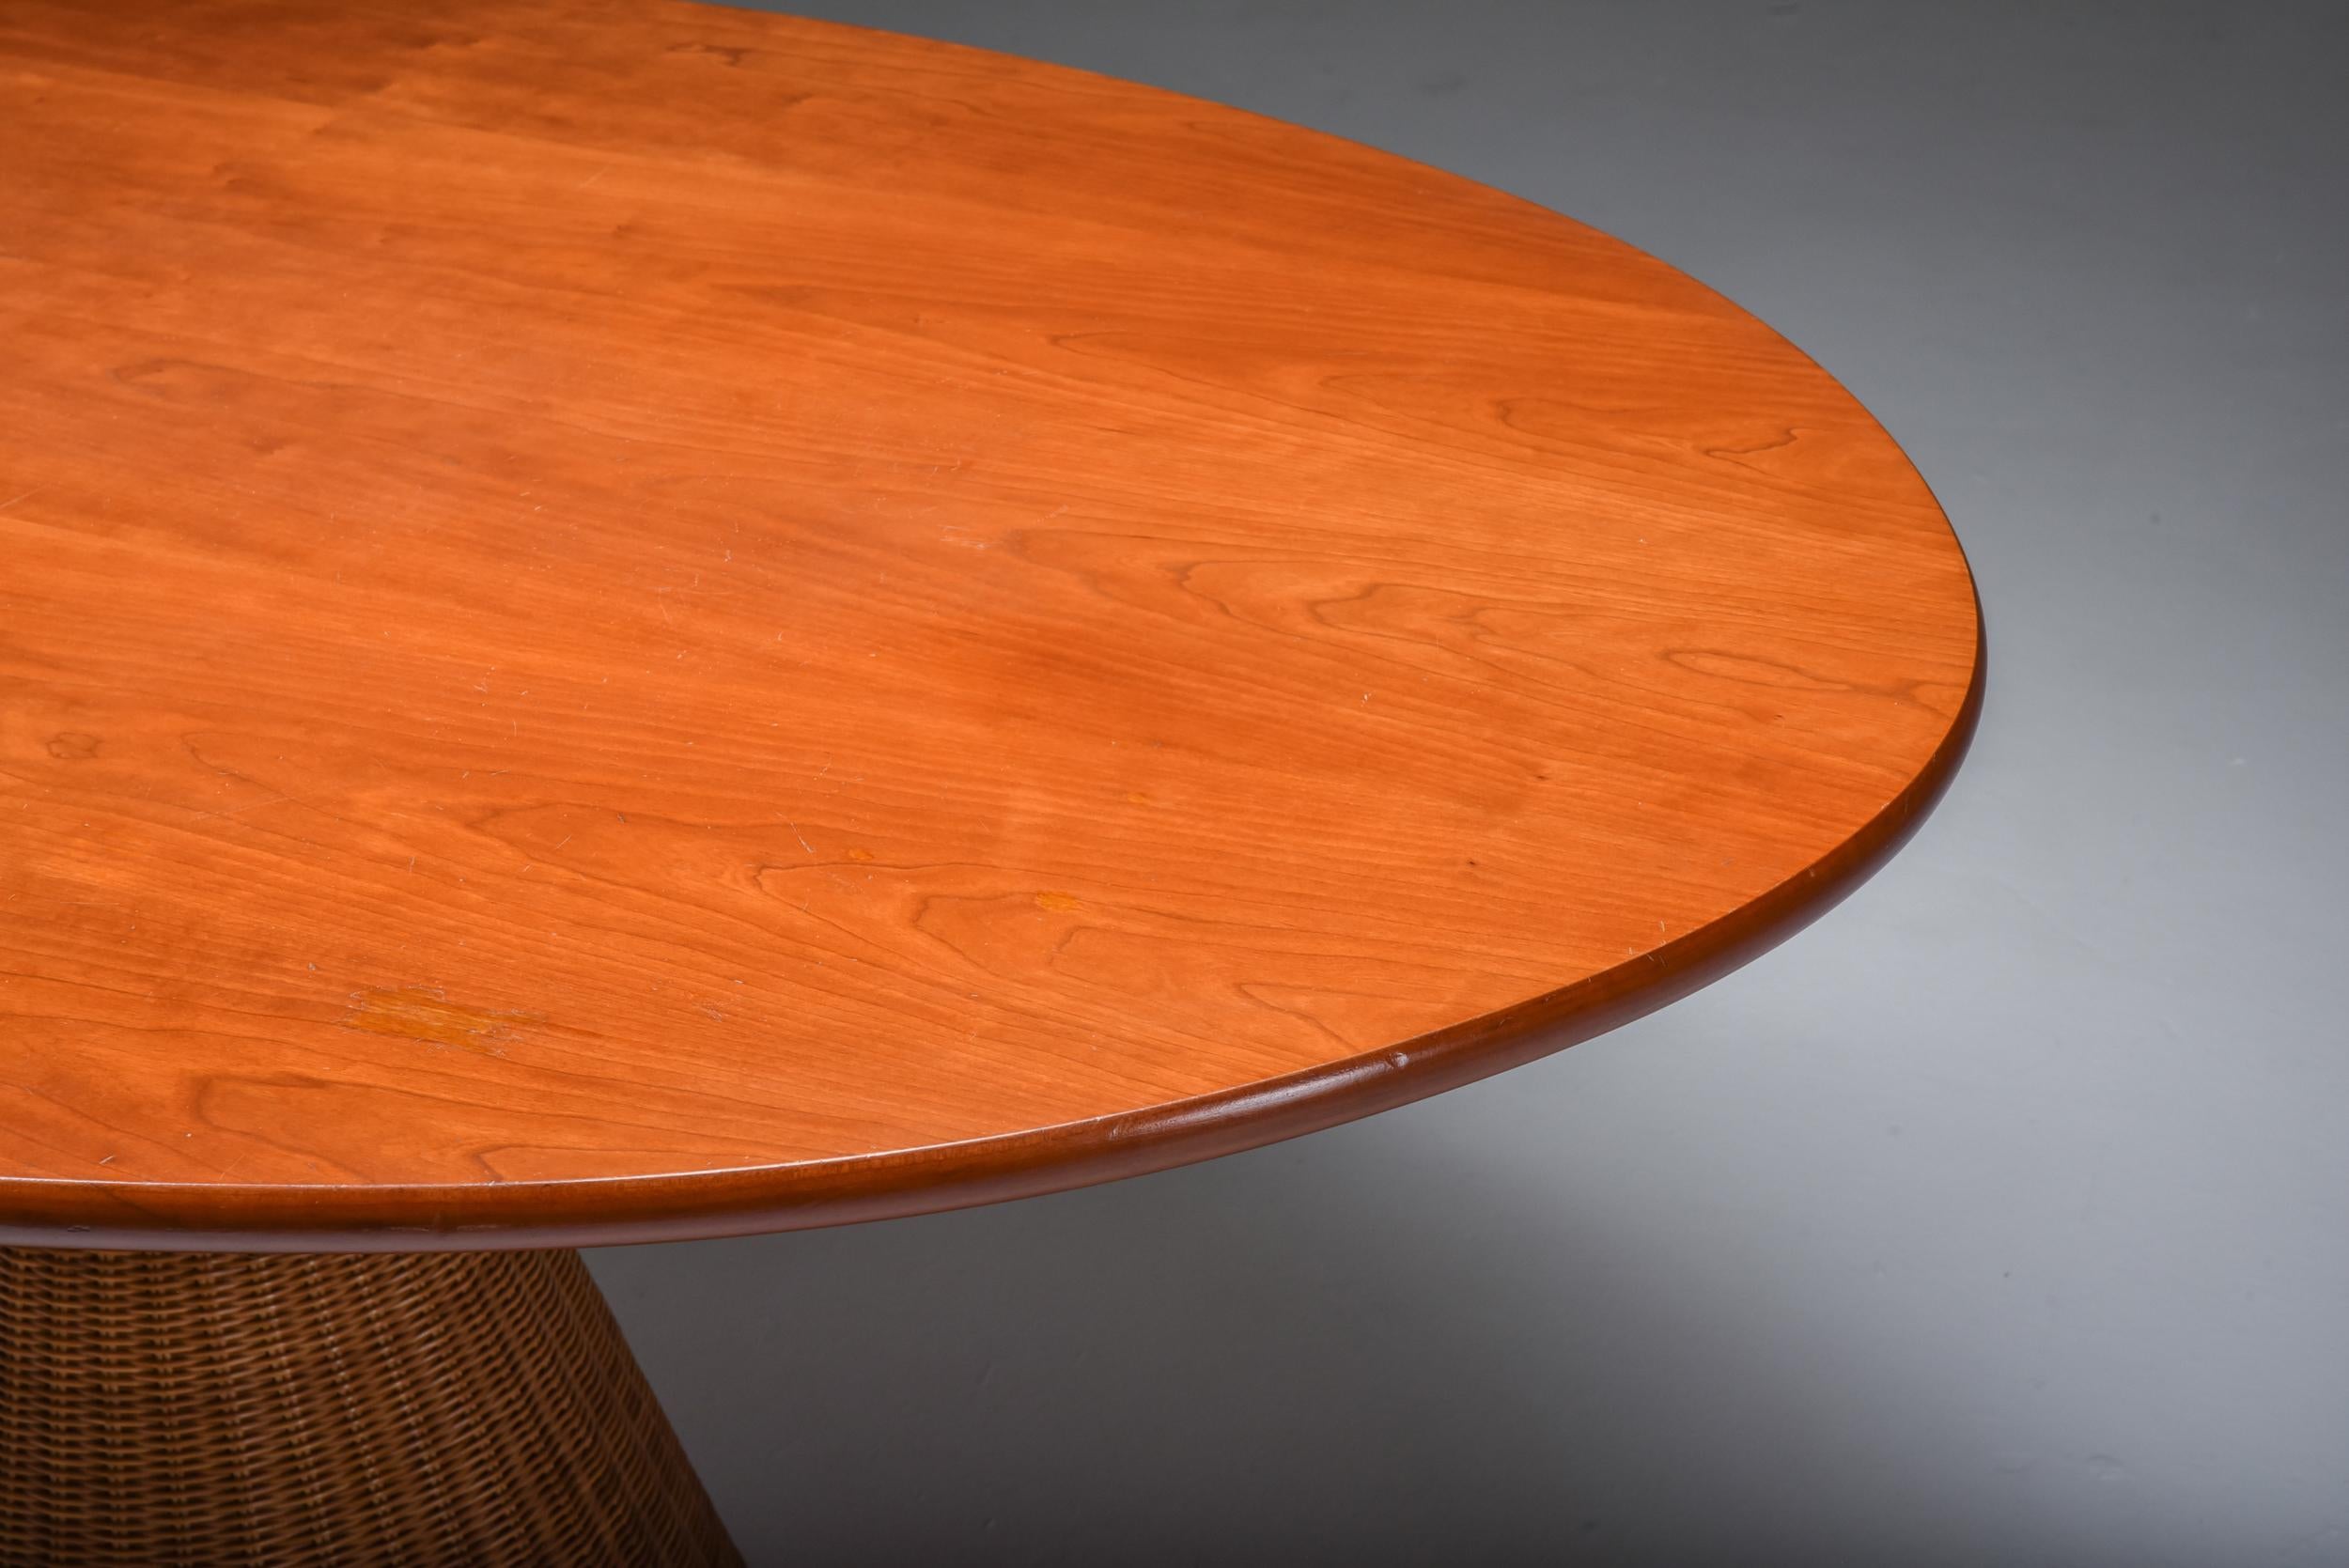 Cane Italian Design Oval Mid-Century Modern Dining Table on a Rattan Base